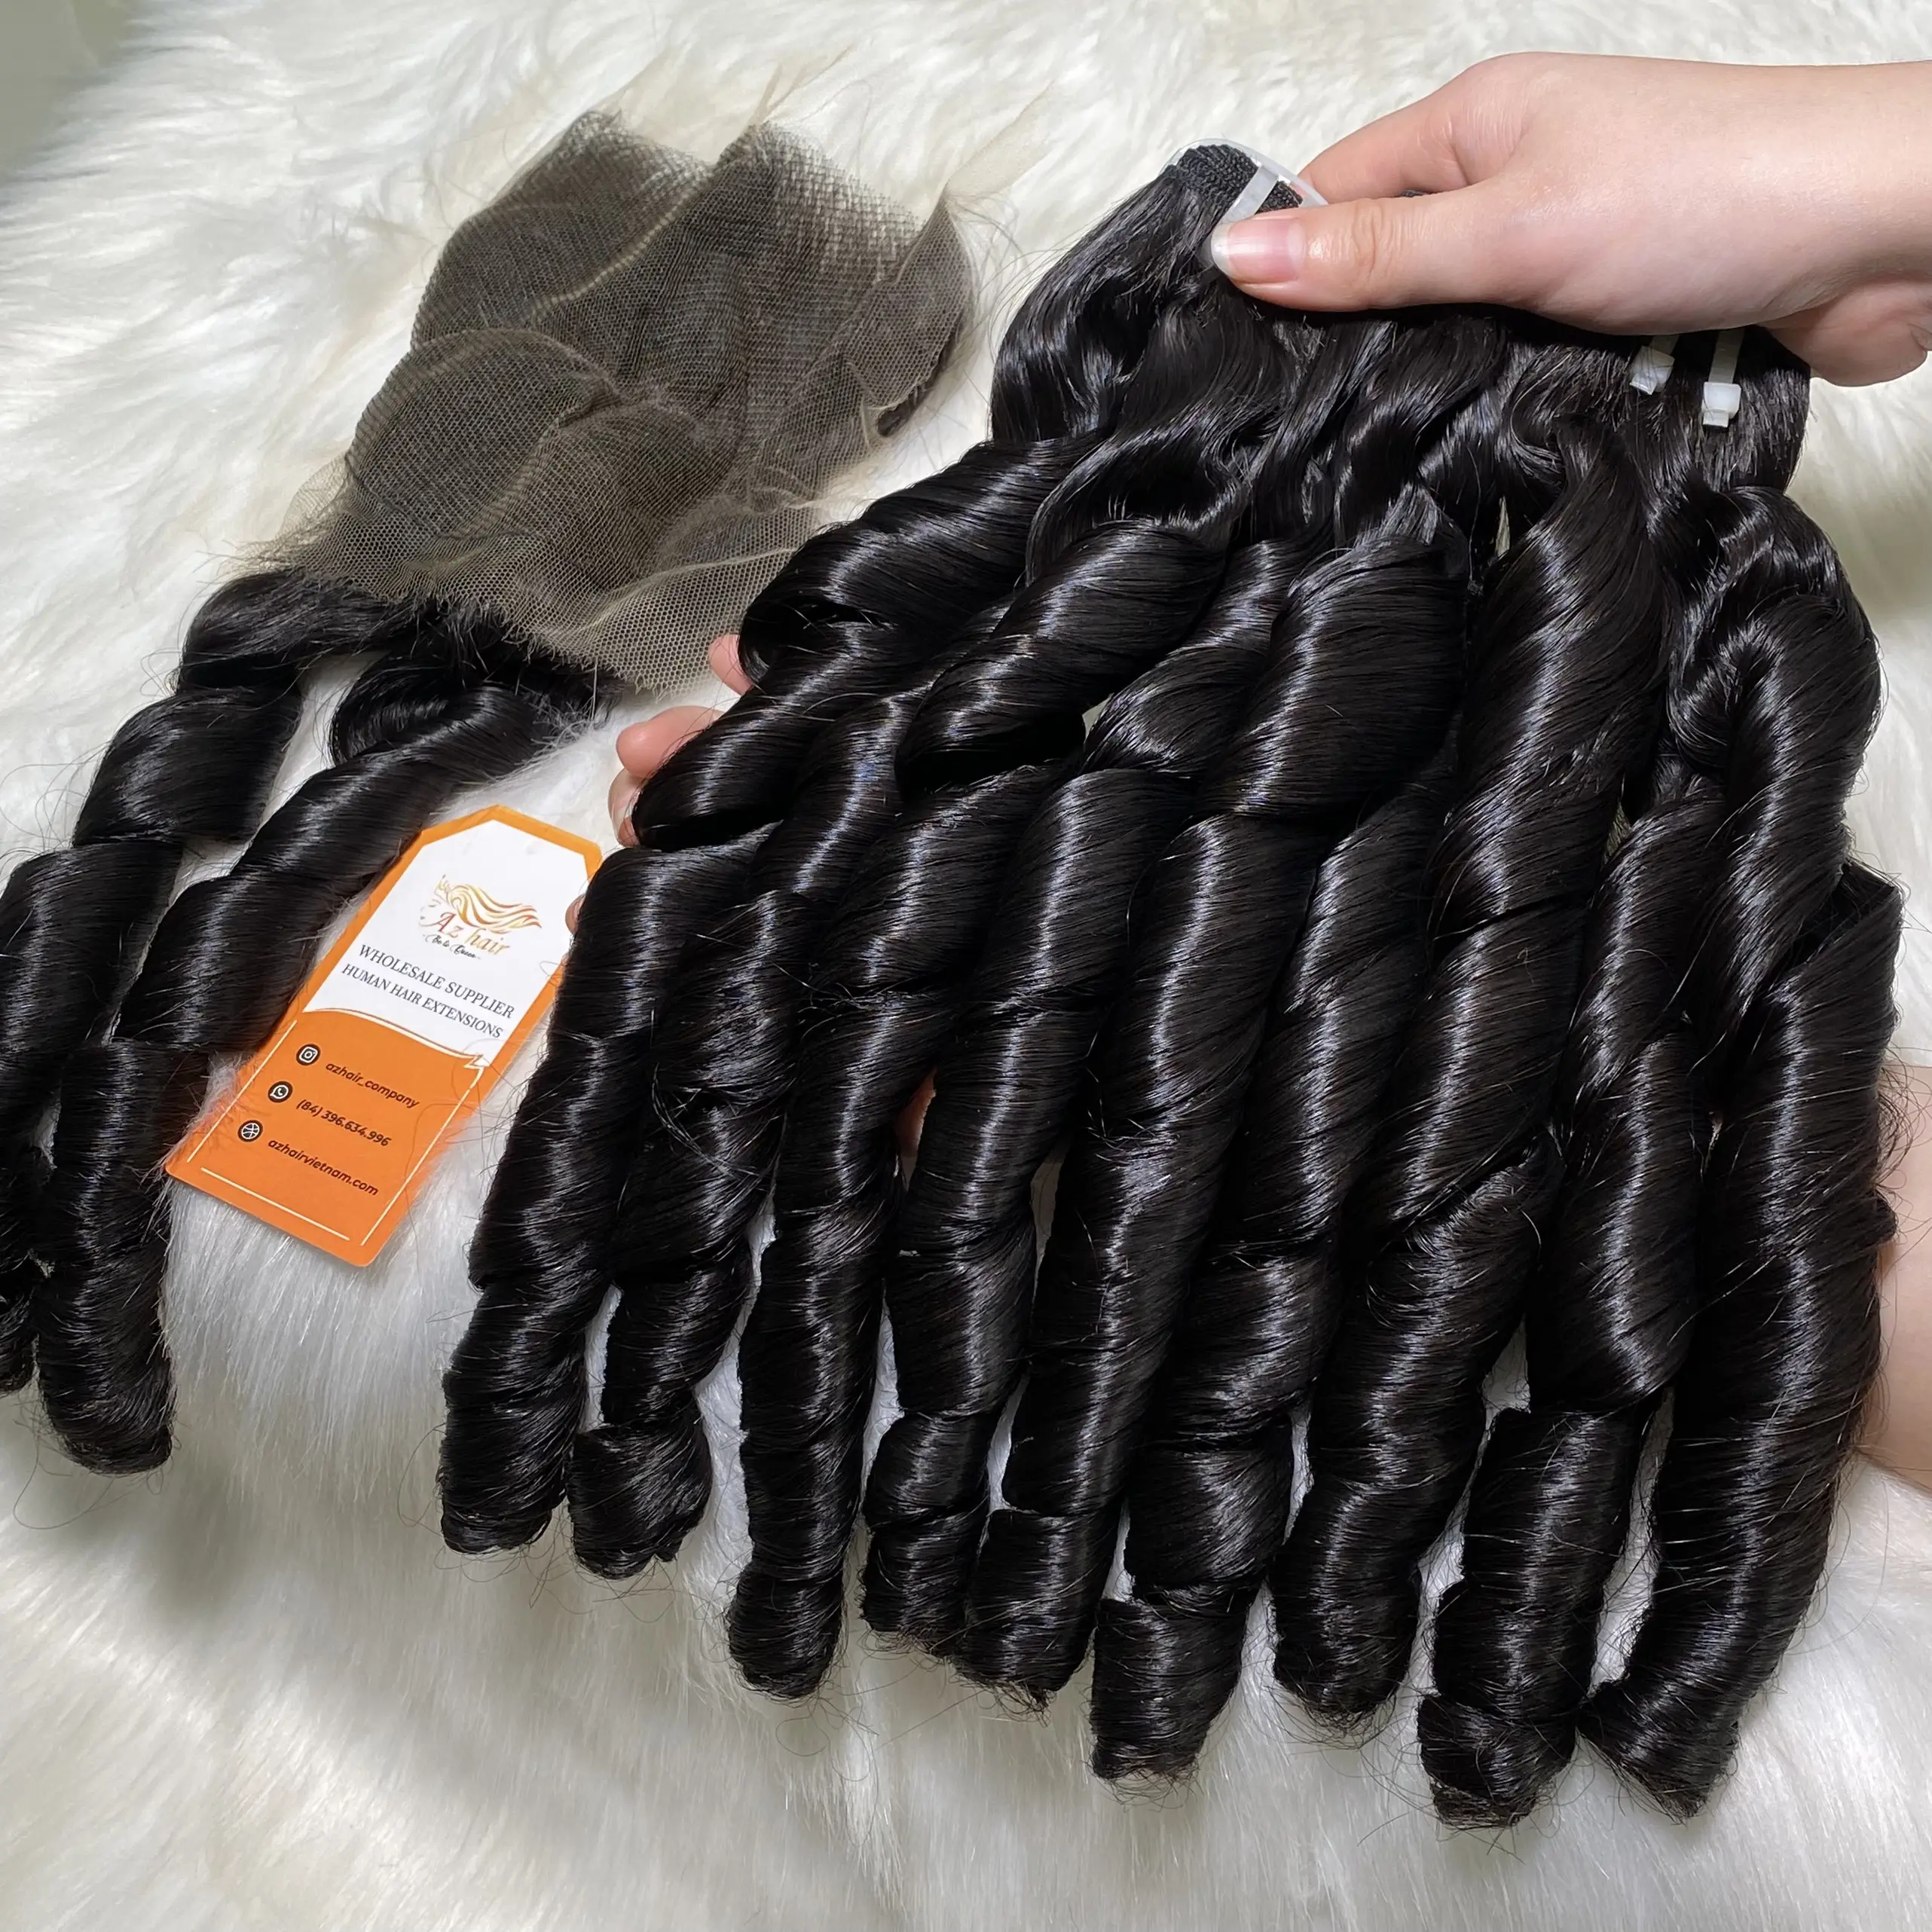 Fummi Wavy Bundles Full Lengths Curly Human Hair Raw Vietnamese Hair Super Double Drawn Hair Extension Wholesale Price